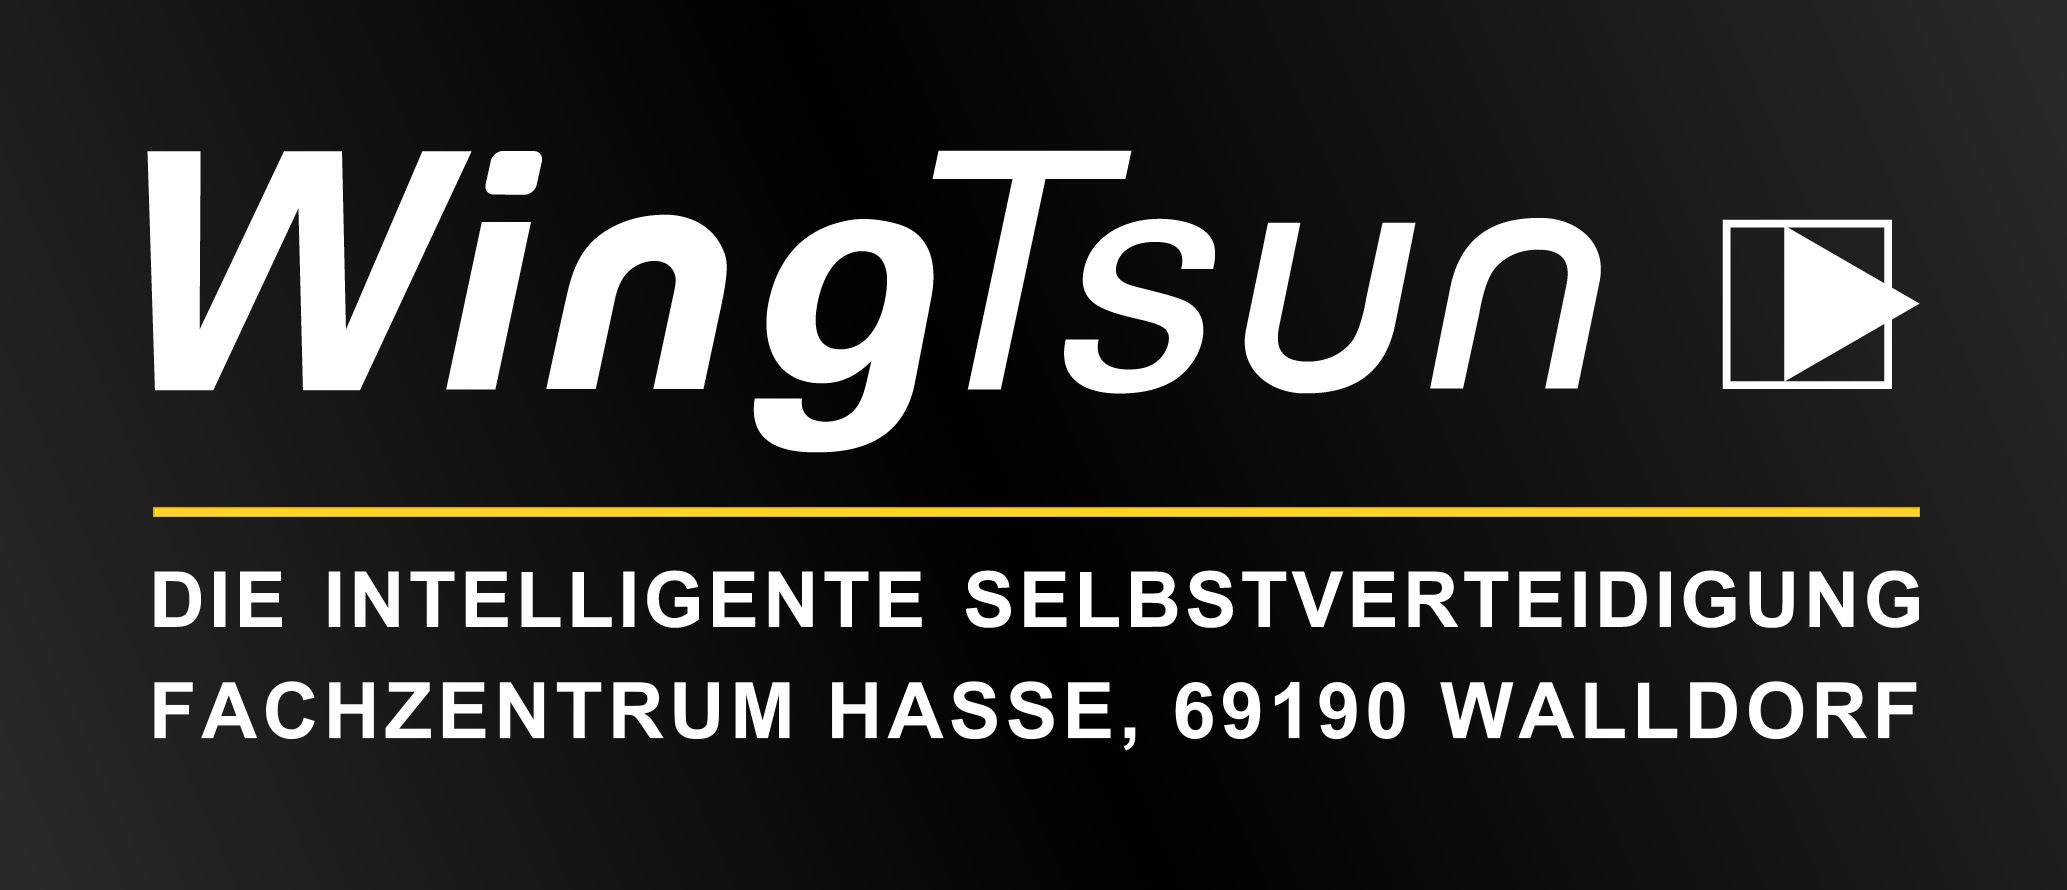 partner-logo-wingtsung walldorf